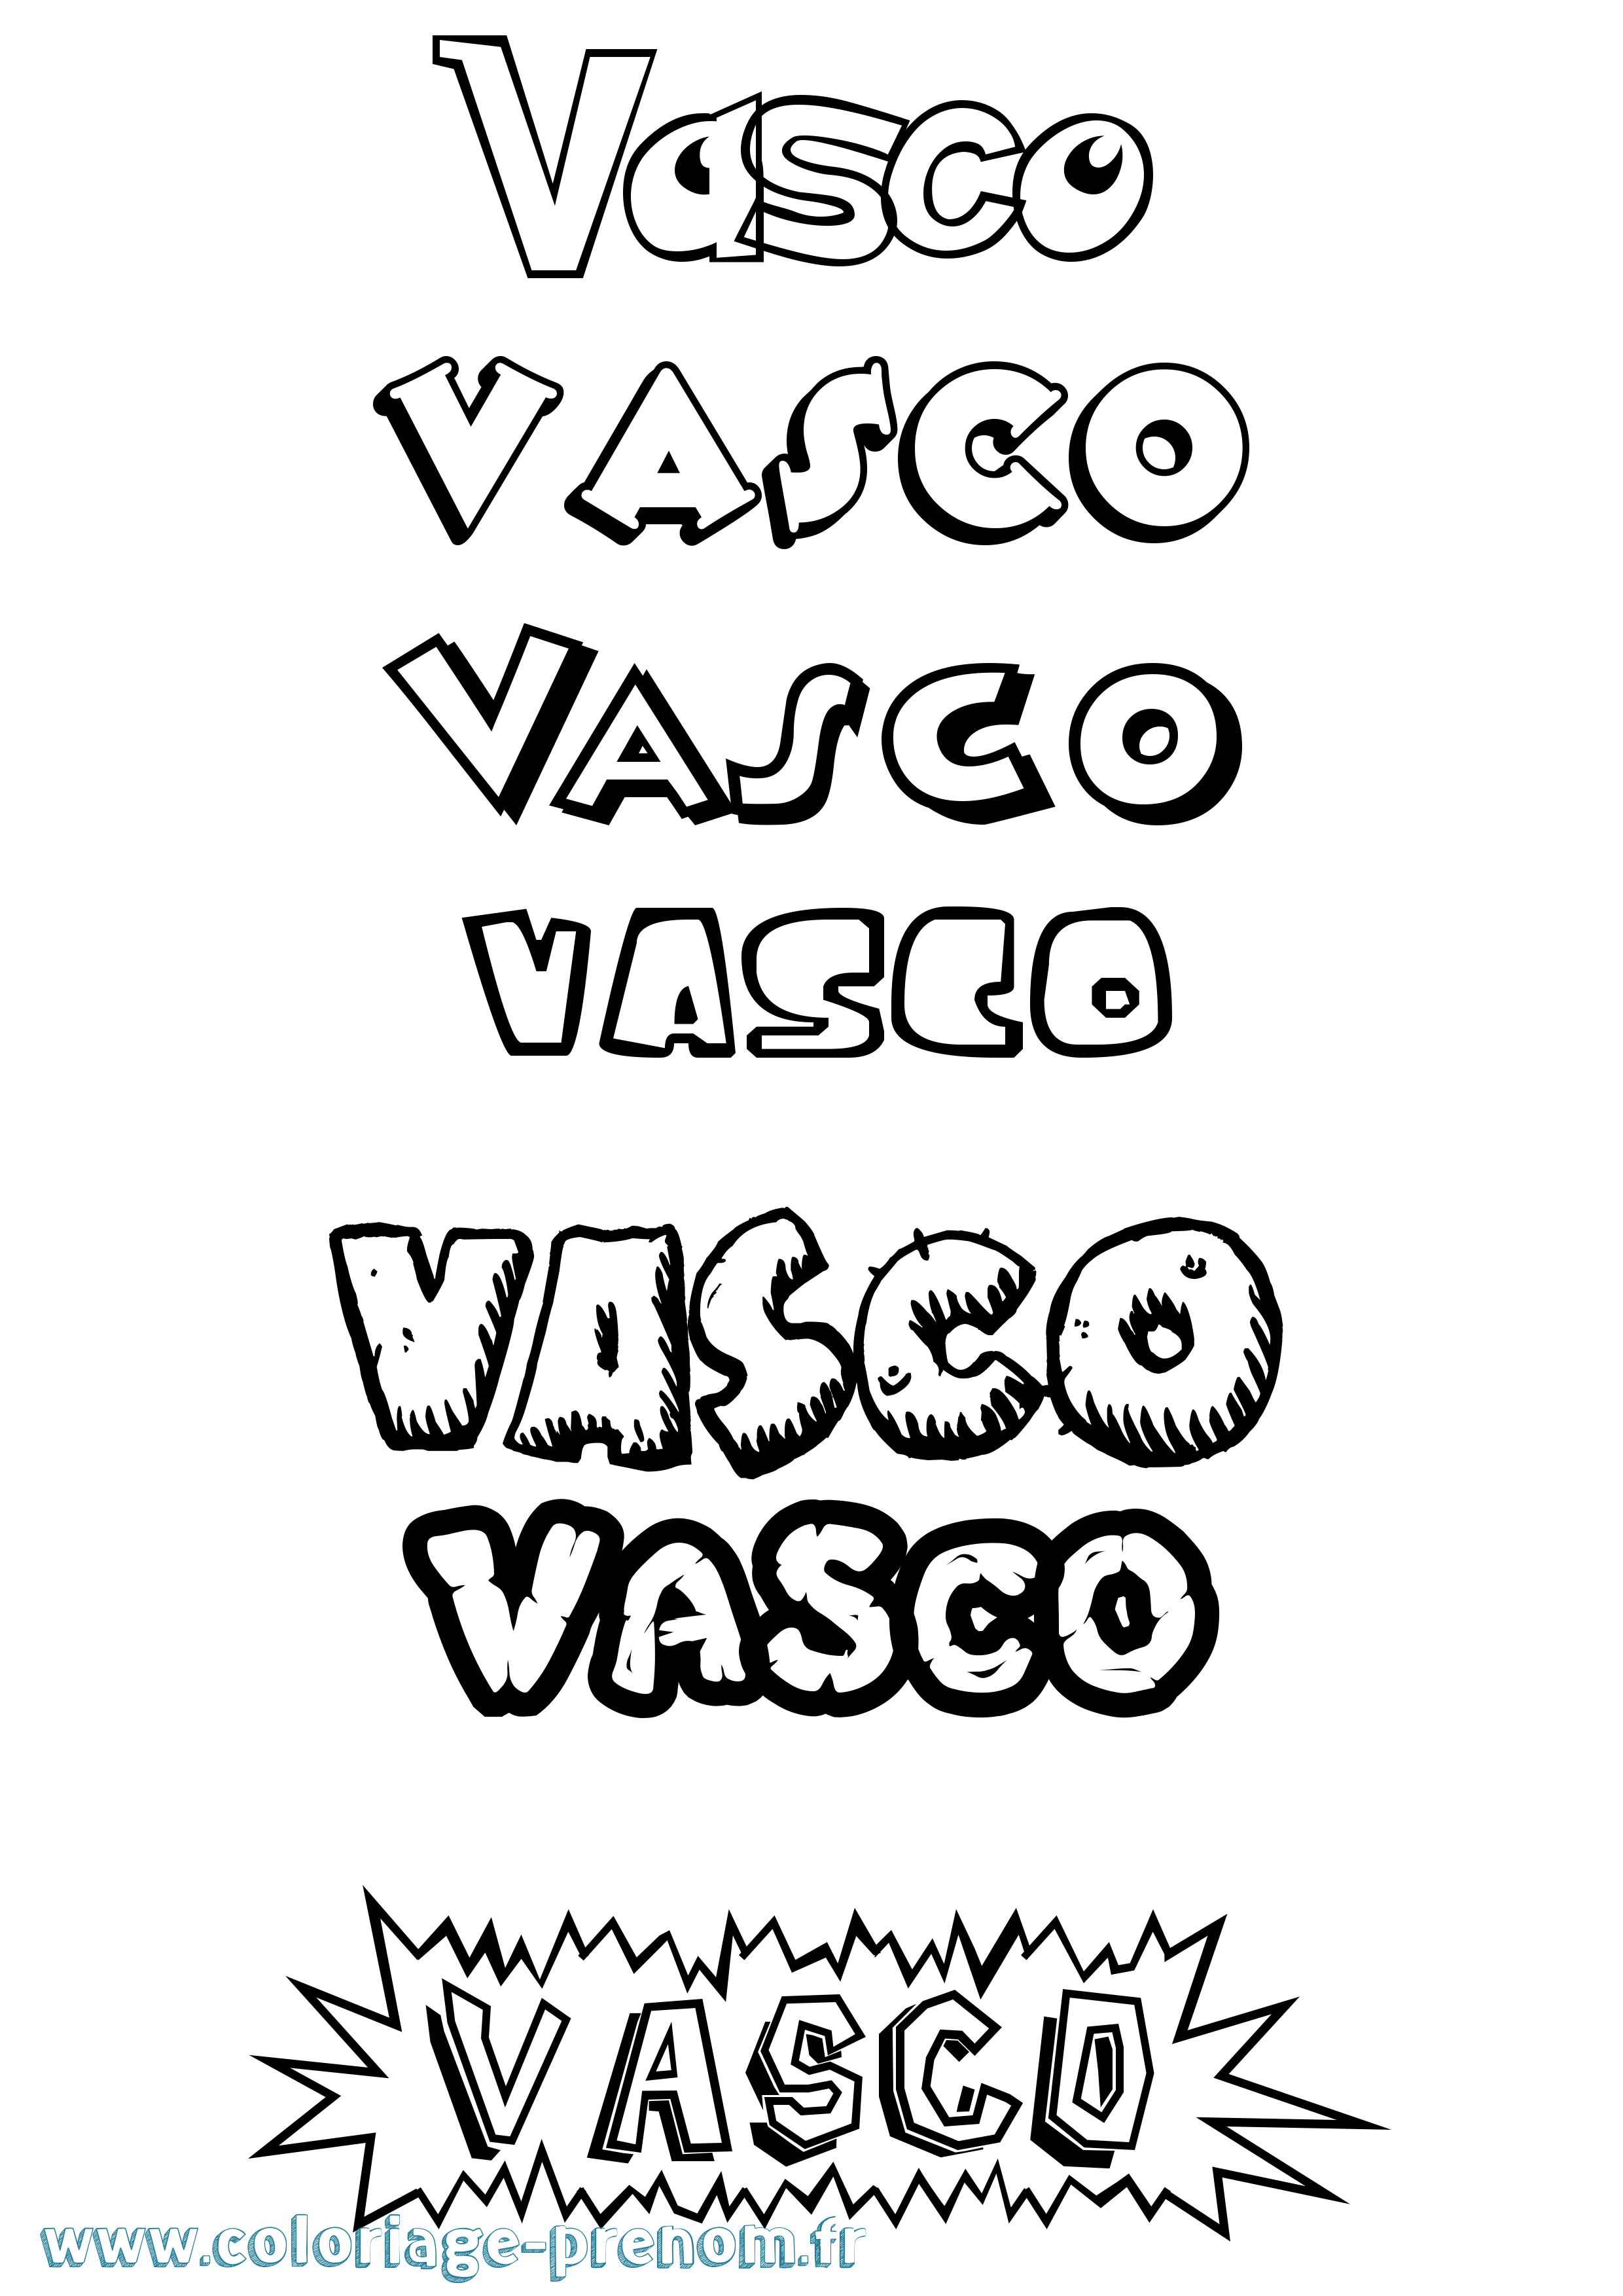 Coloriage prénom Vasco